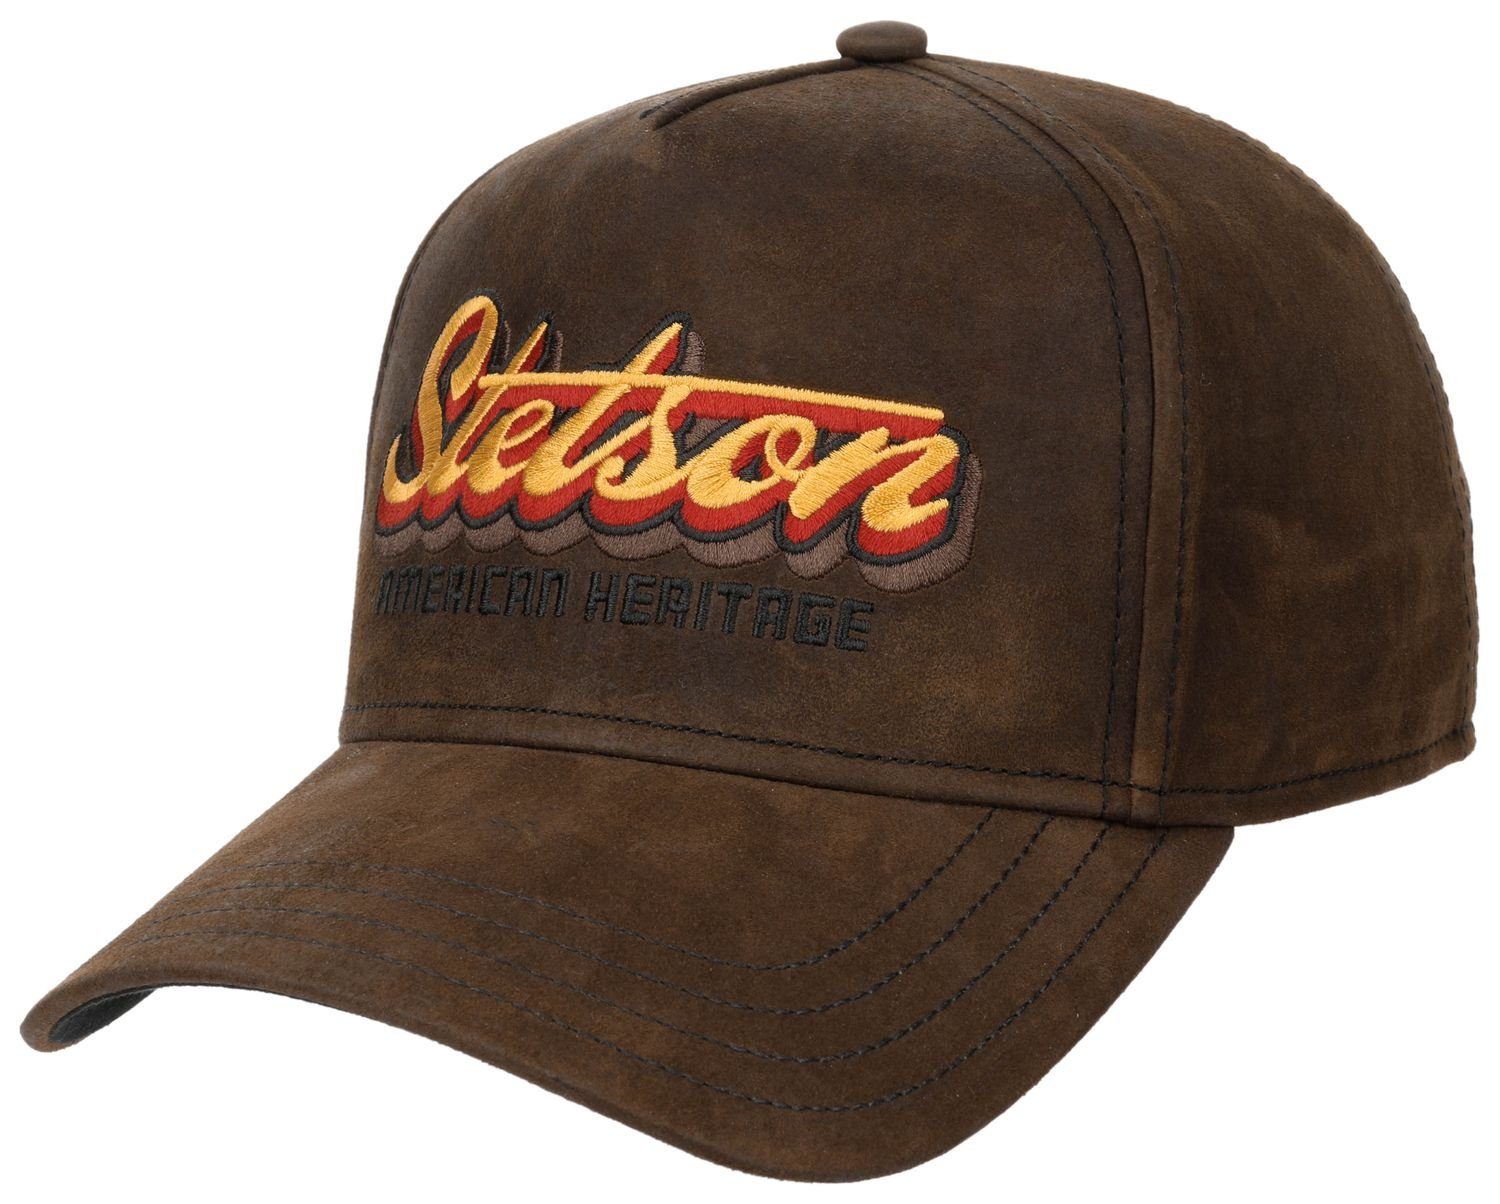 Stetson Baseball Cap wasserabweisende Logo Ziegenvelourleder Trucker Cap